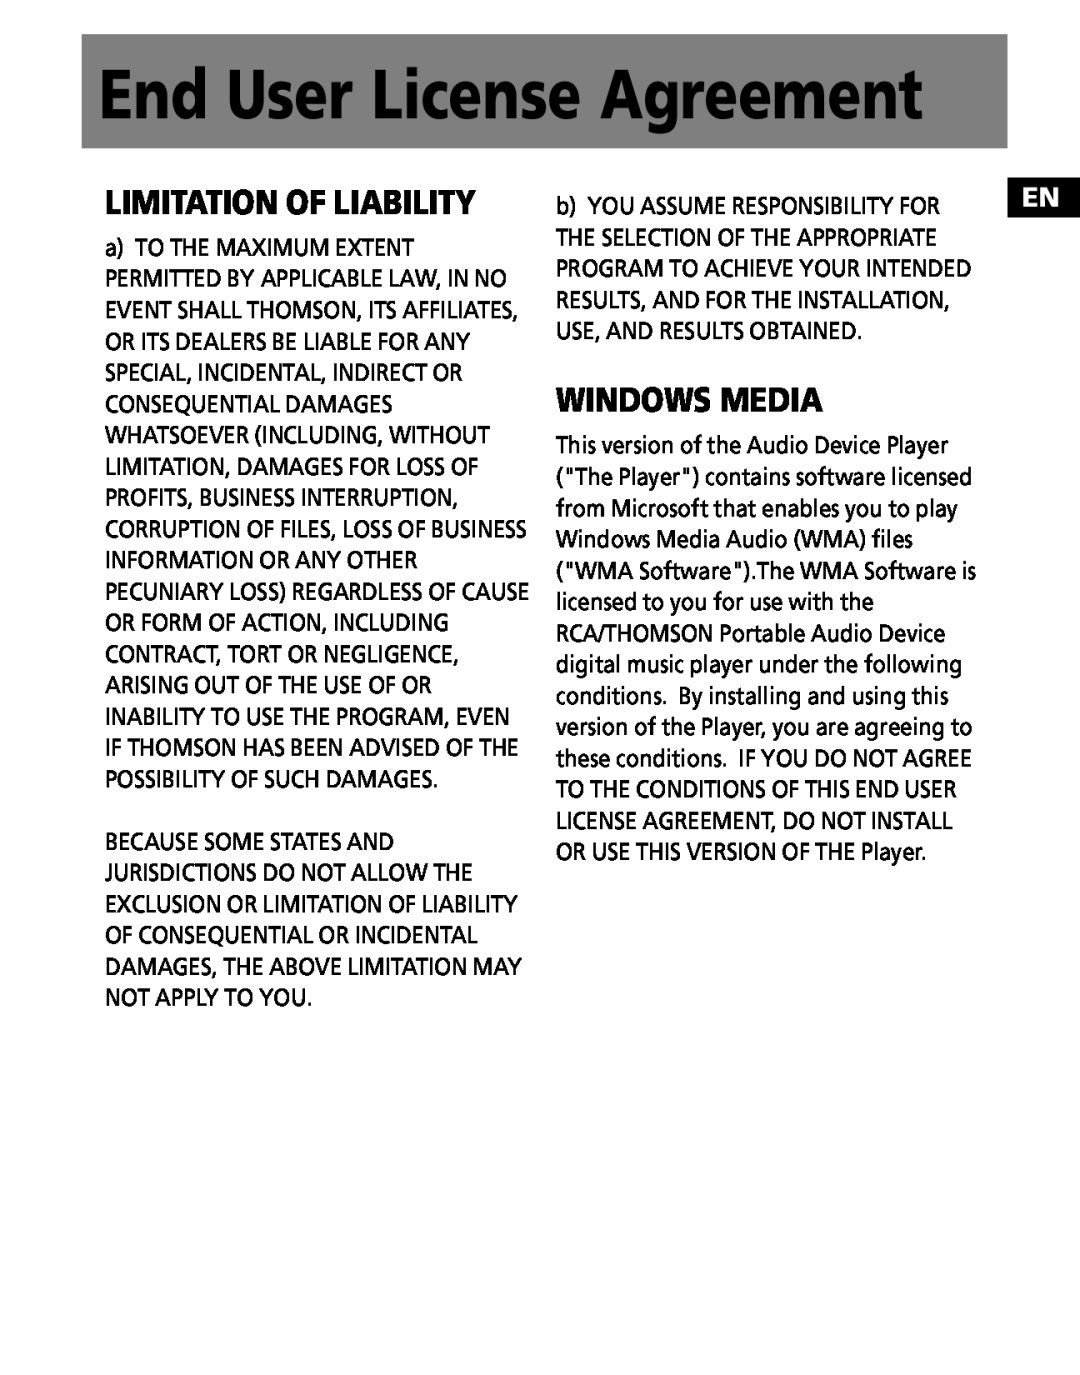 RCA M100256 user manual End User License Agreement, Limitation Of Liability, Windows Media 